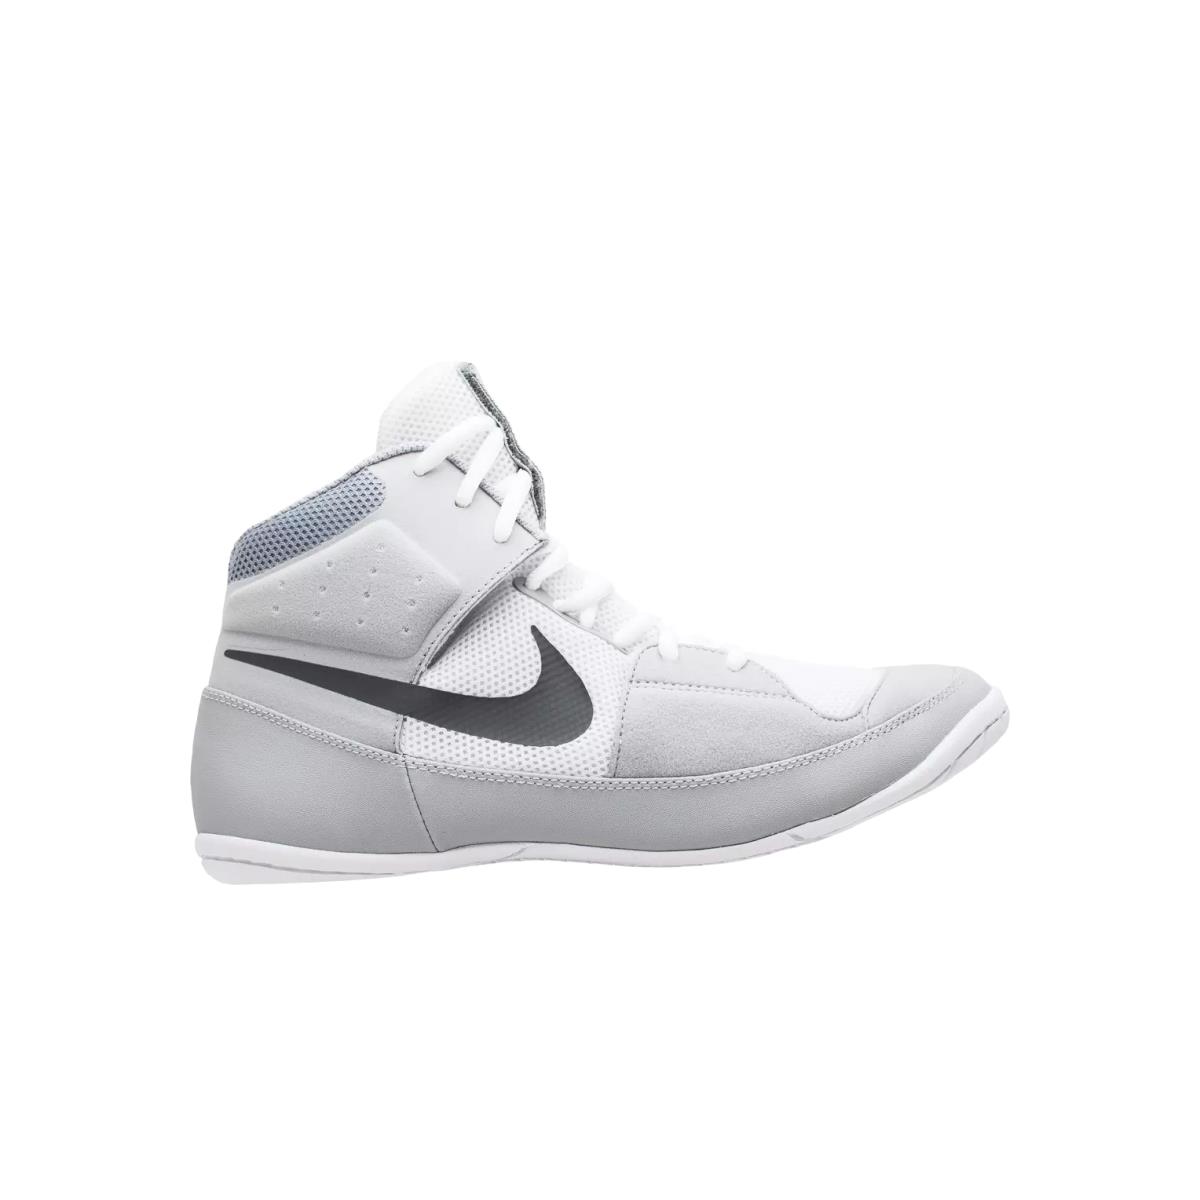 Nike Fury 3/4 White Grey Grade Wrestling Shoe AO2416-101 Size 9.5